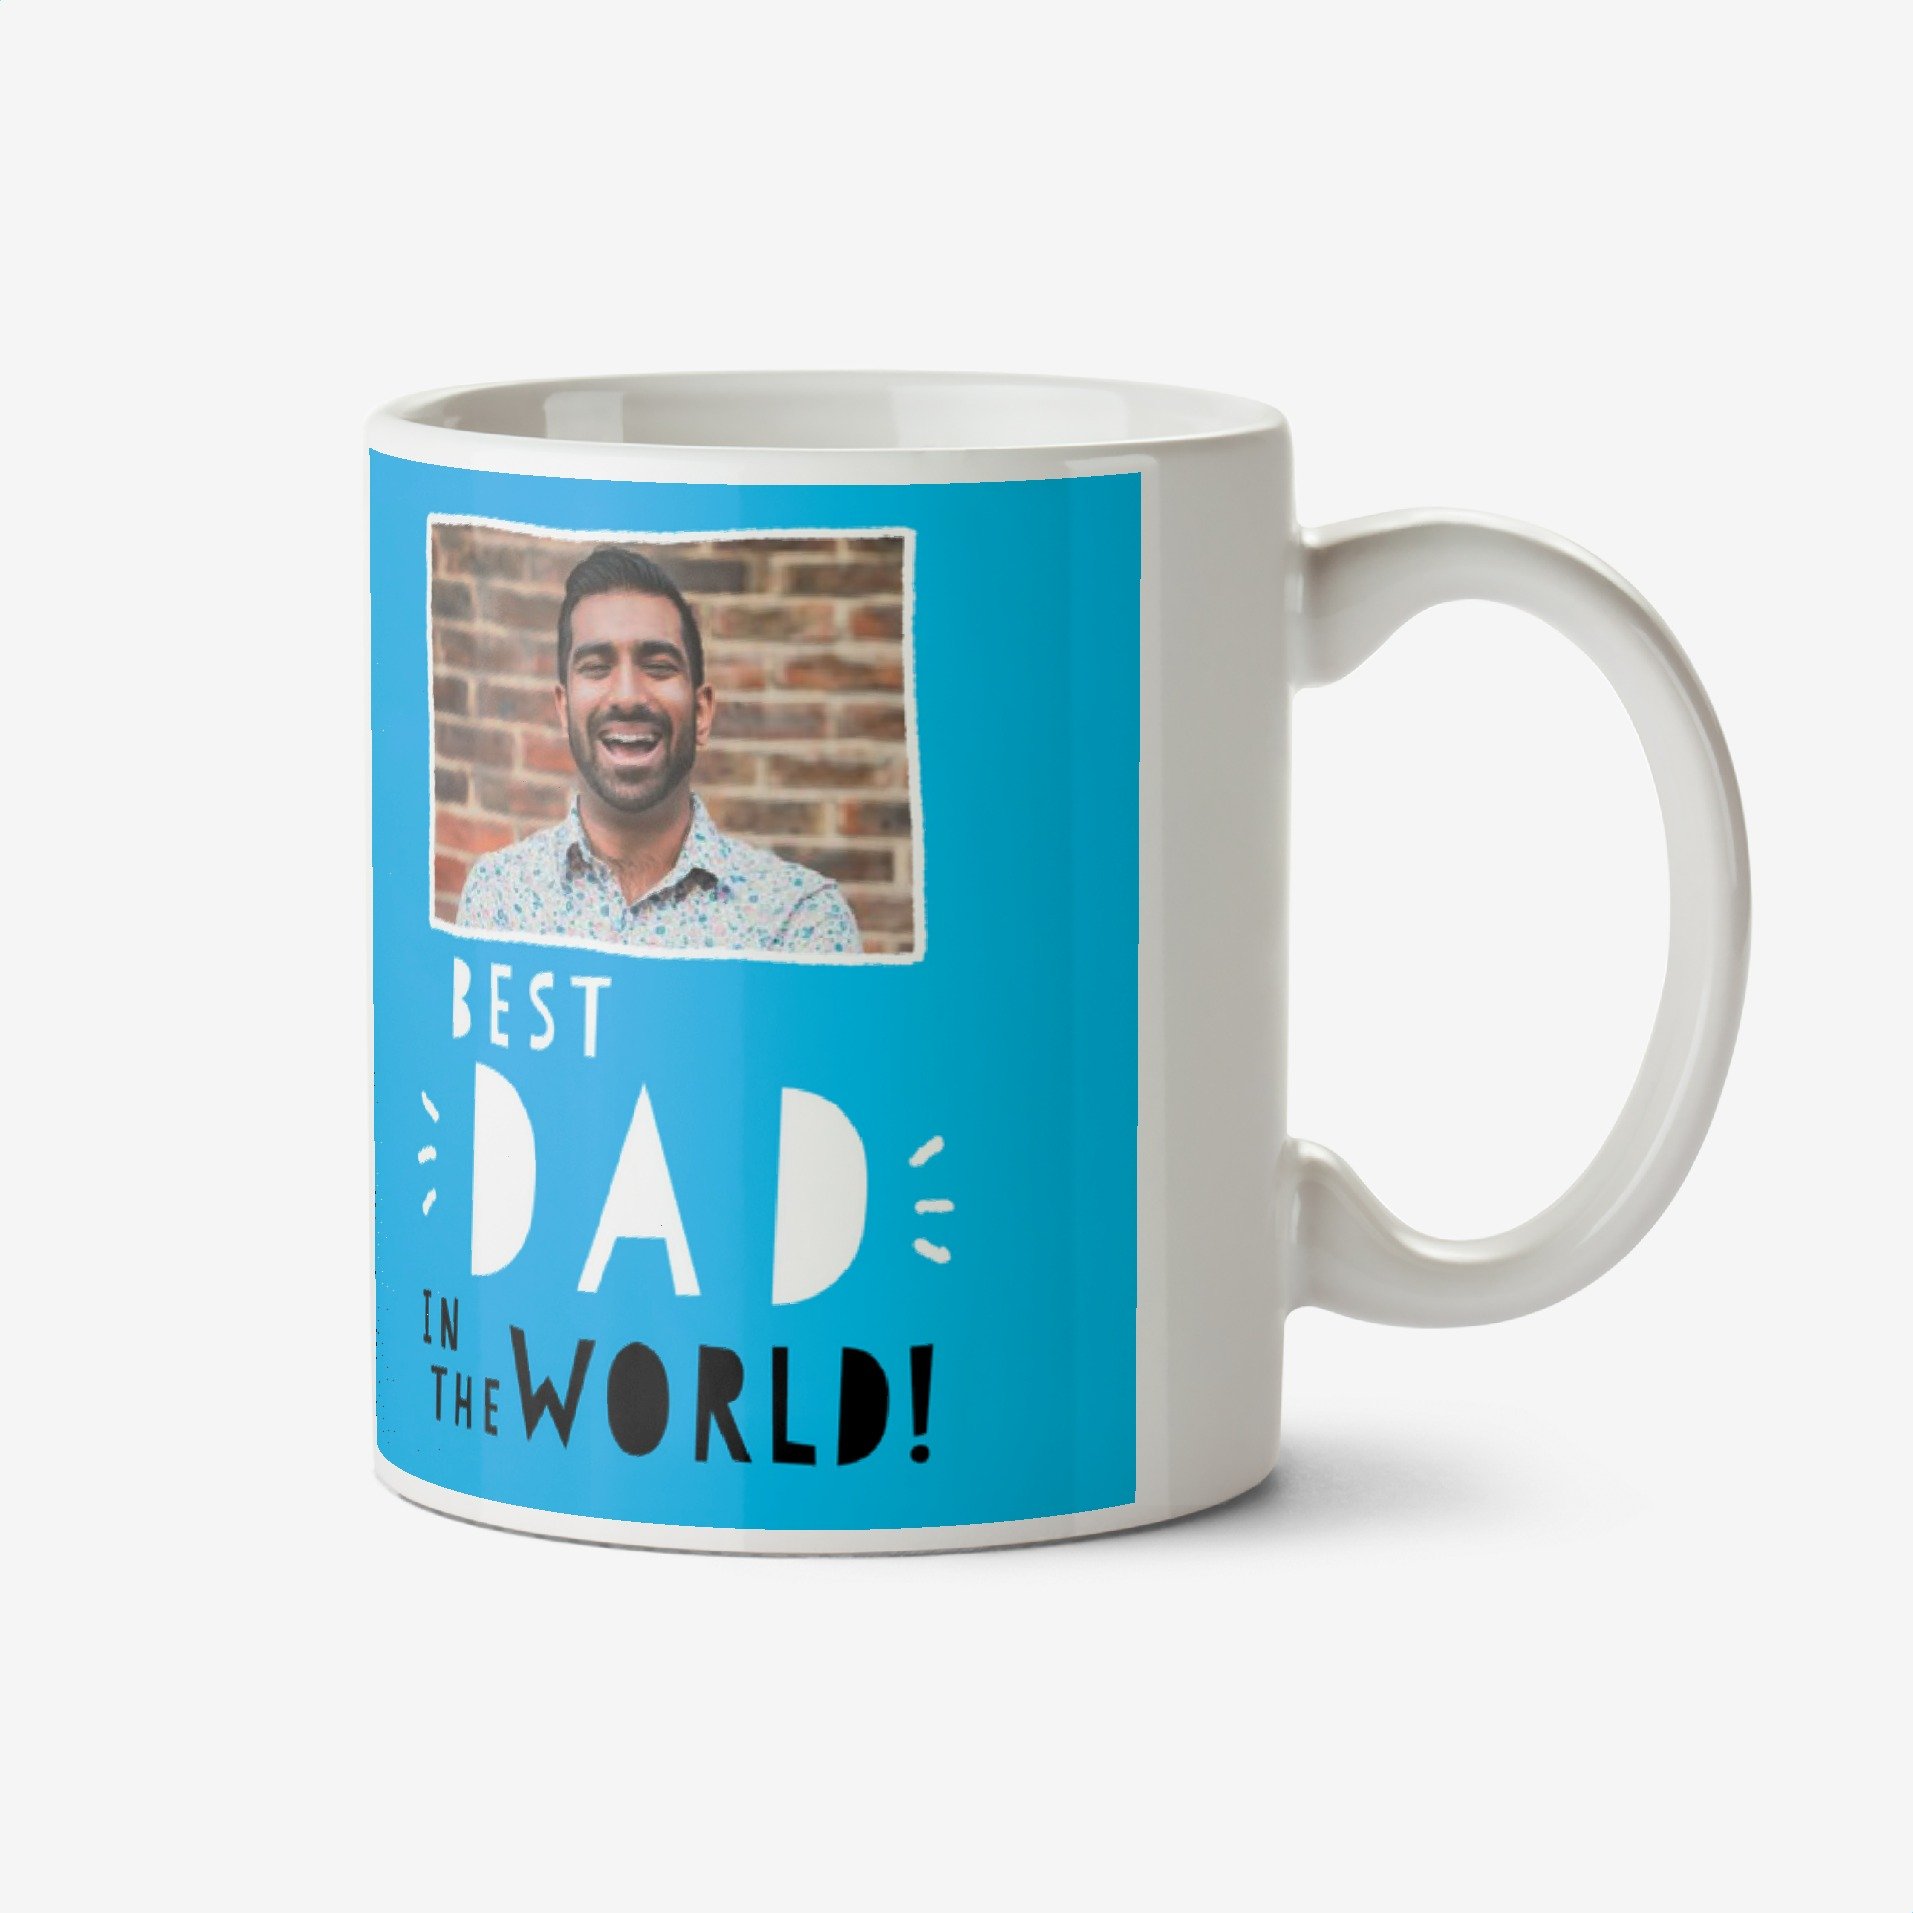 Moonpig Quirky Illustration Typographic Photo Upload Best Dad In The World Mug Ceramic Mug